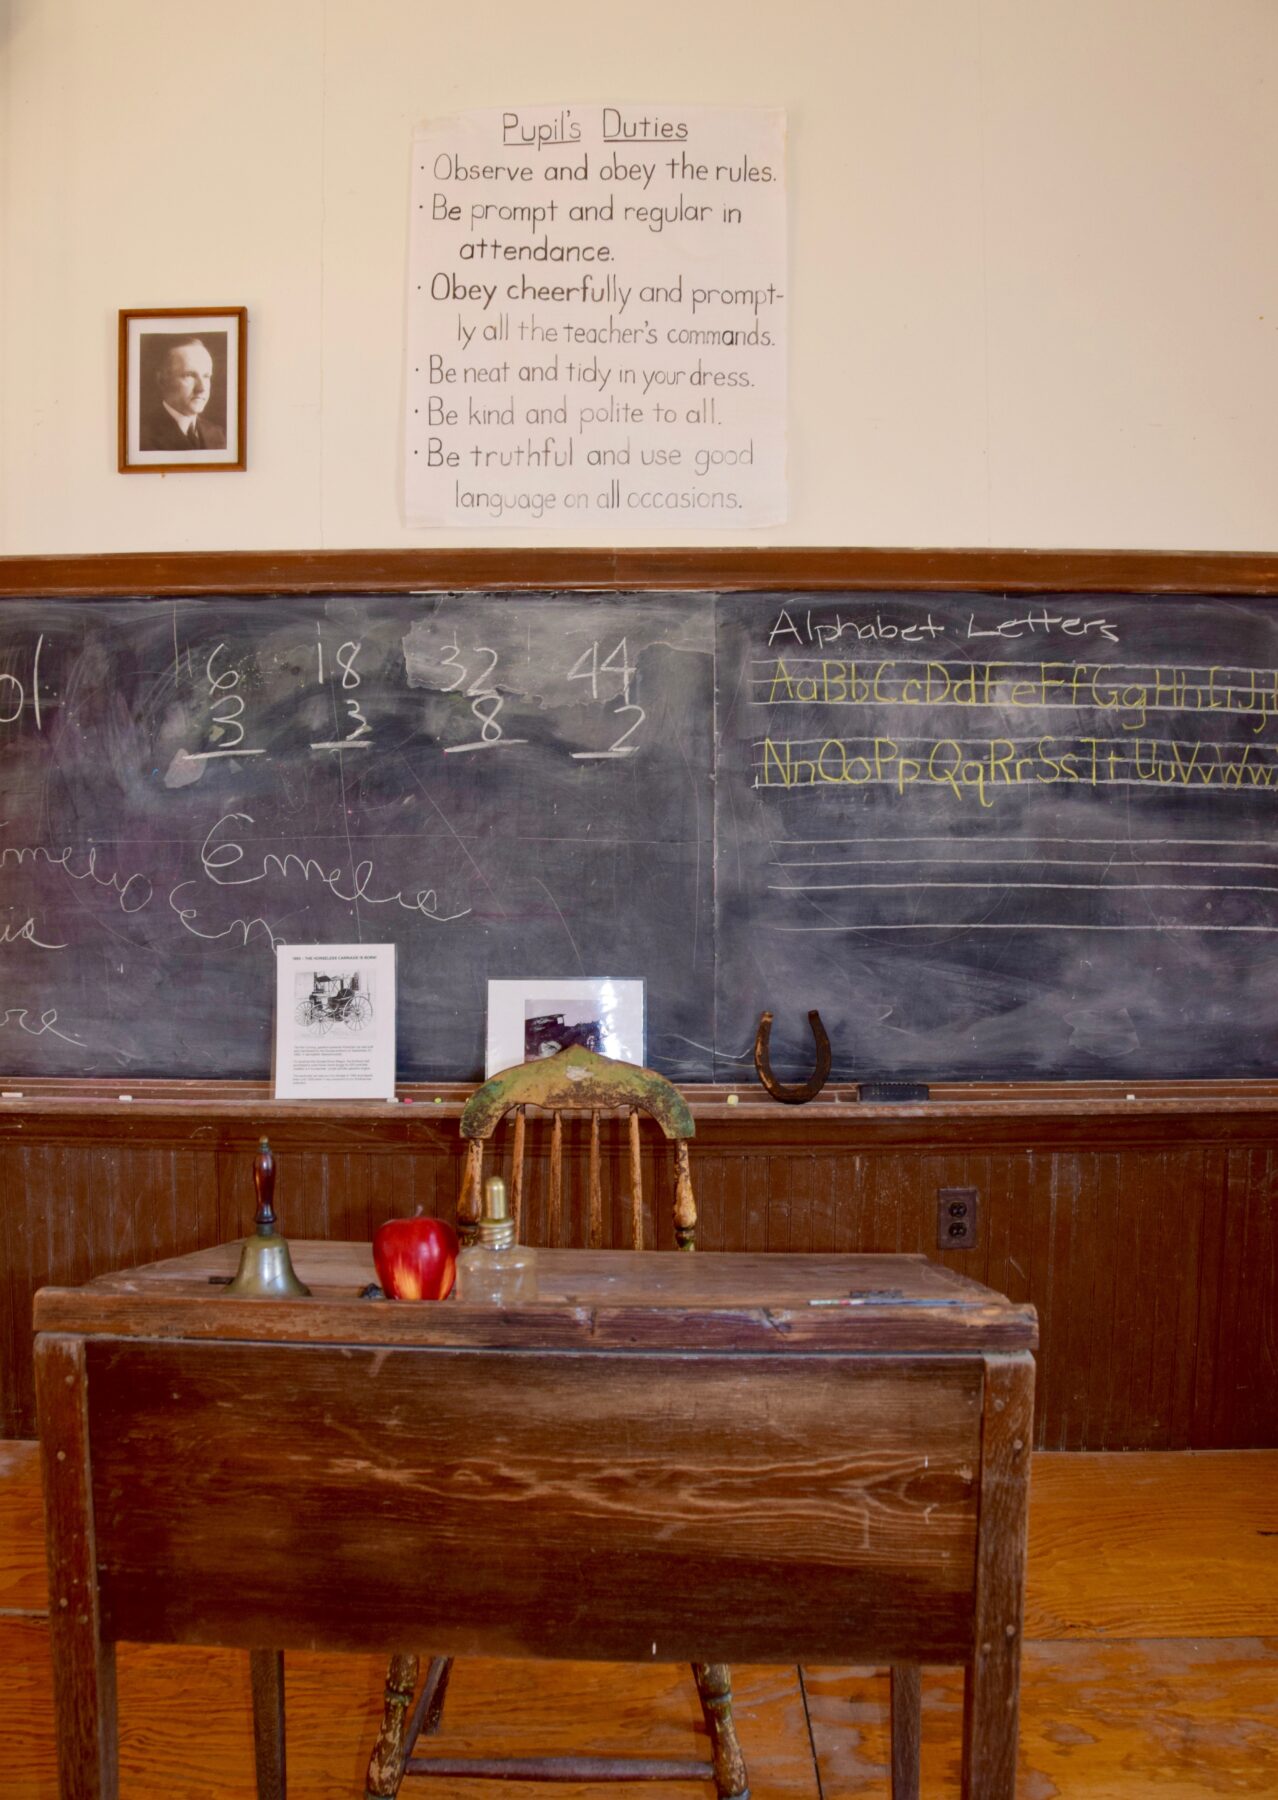 Chalkboard, teacher's desk with an apple on top, interior of Kingsley Schoolhouse.